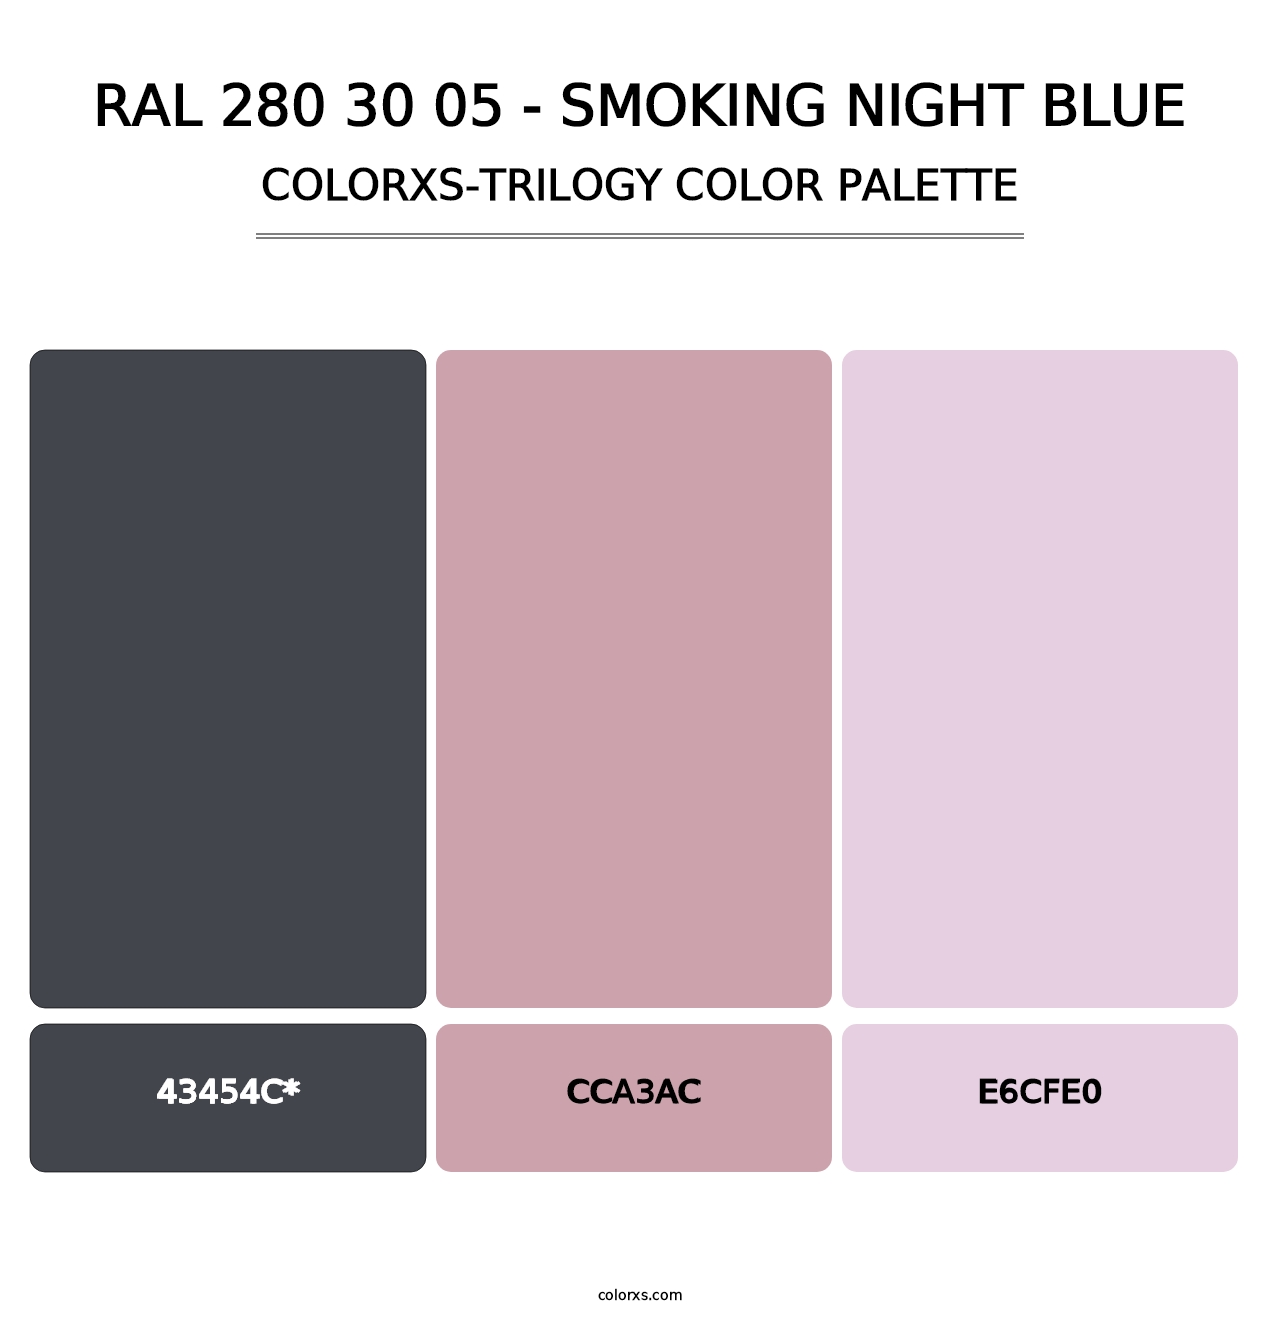 RAL 280 30 05 - Smoking Night Blue - Colorxs Trilogy Palette